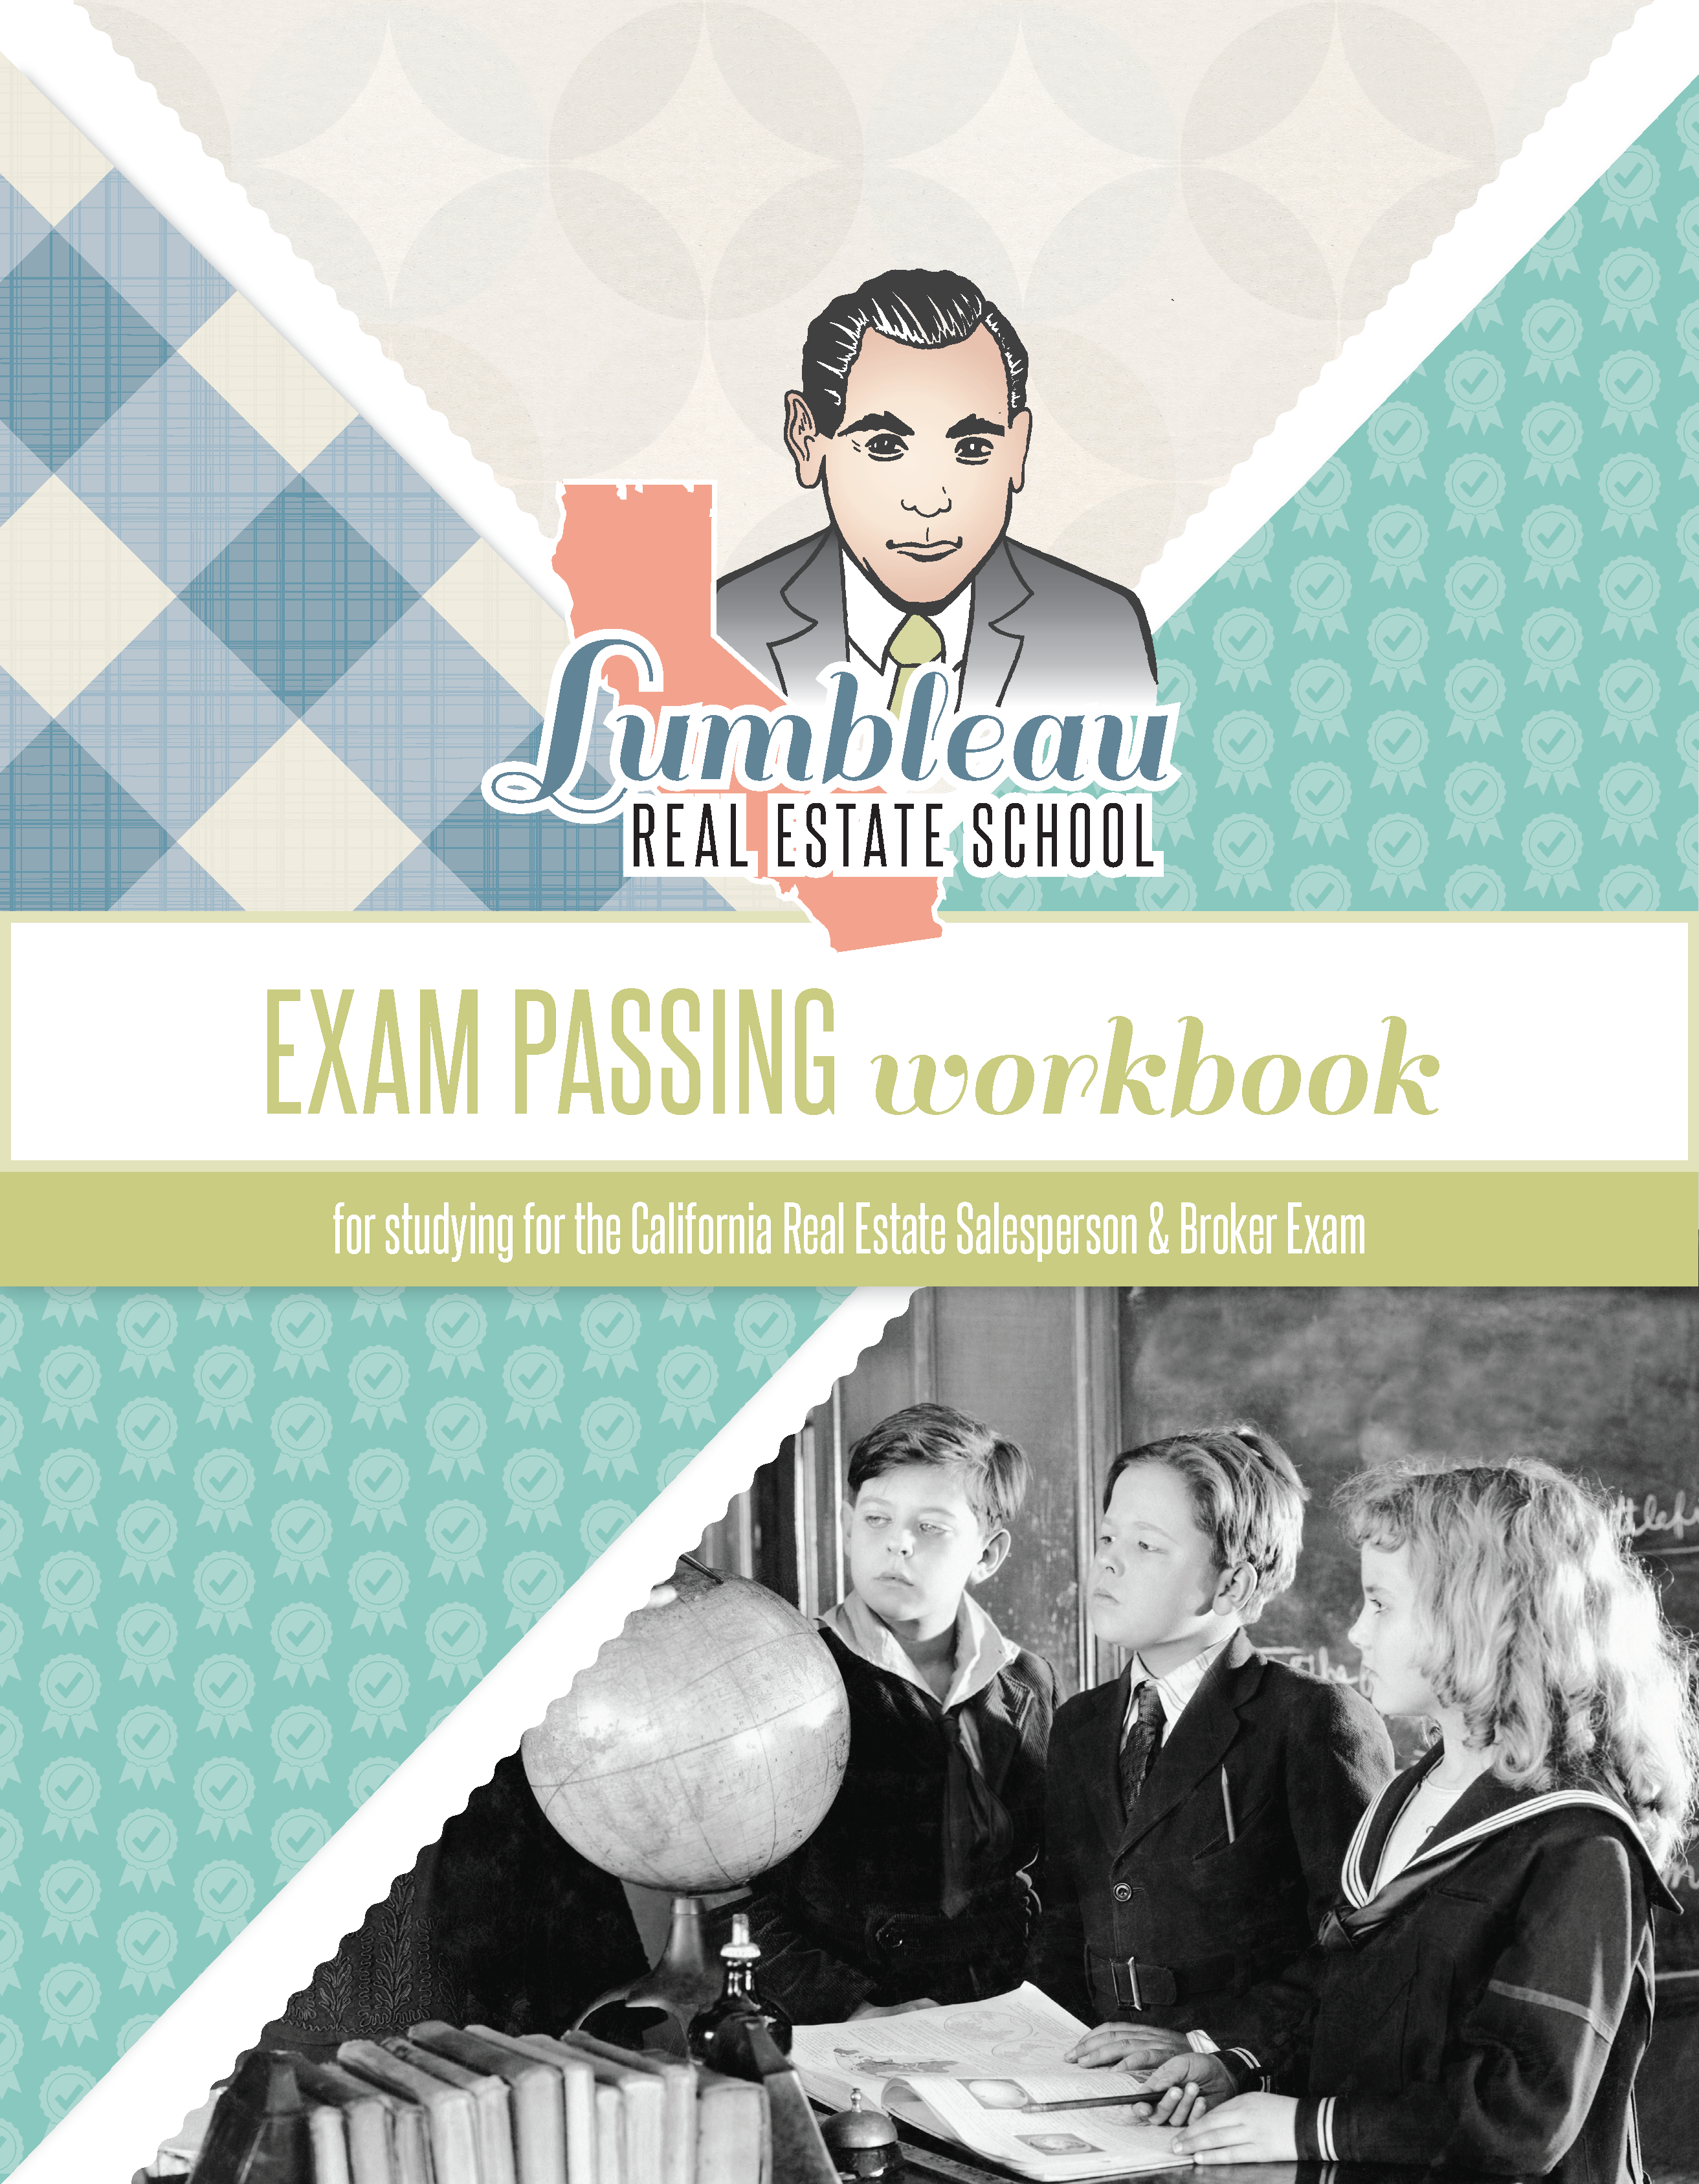 Lumbleau Exam Passing Workbook